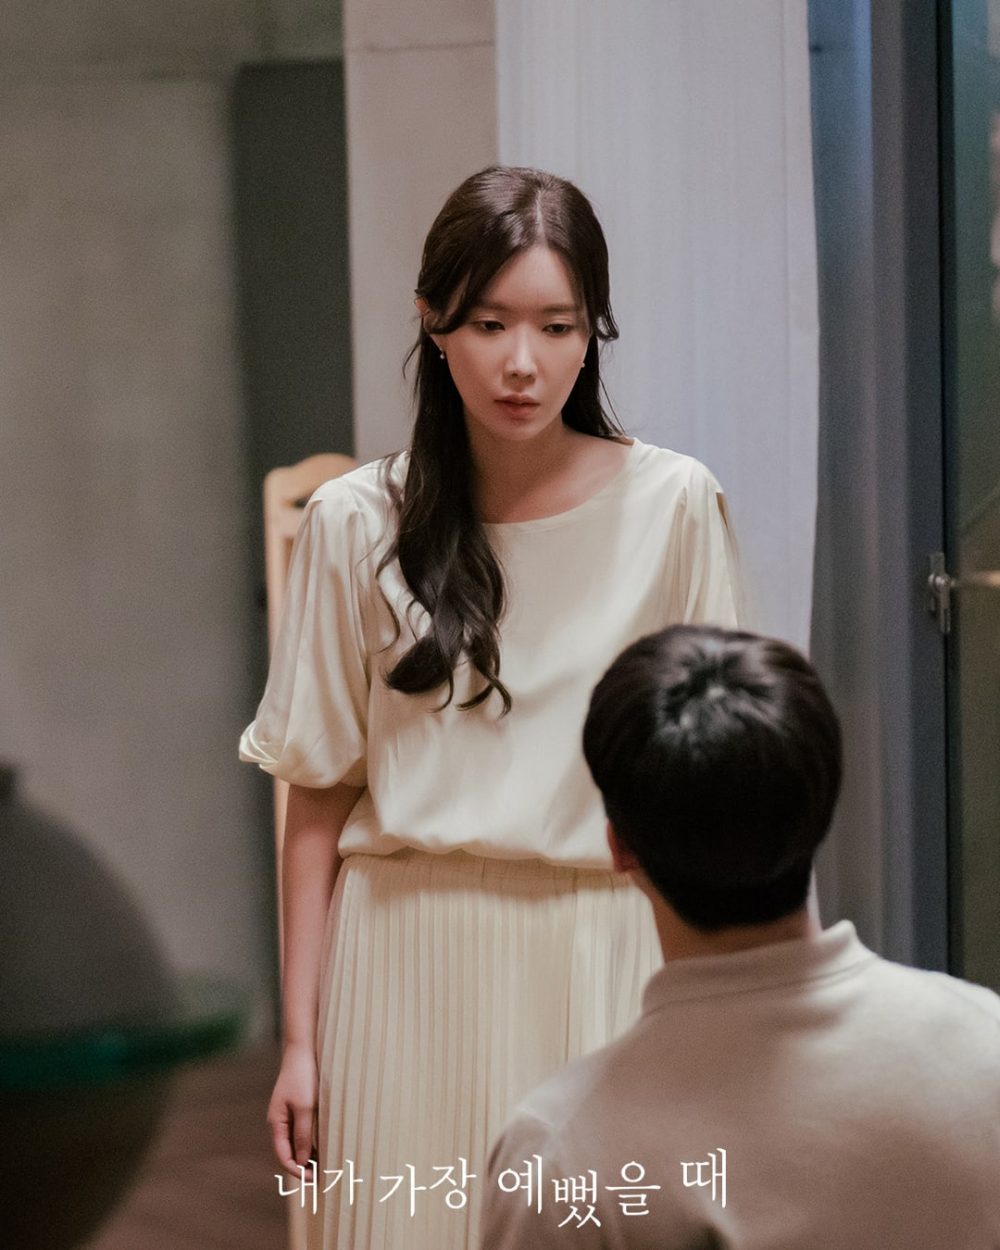 Phim Im Soo Hyang: Khi em đẹp nhất - When I Was the Most Beautiful (2020)